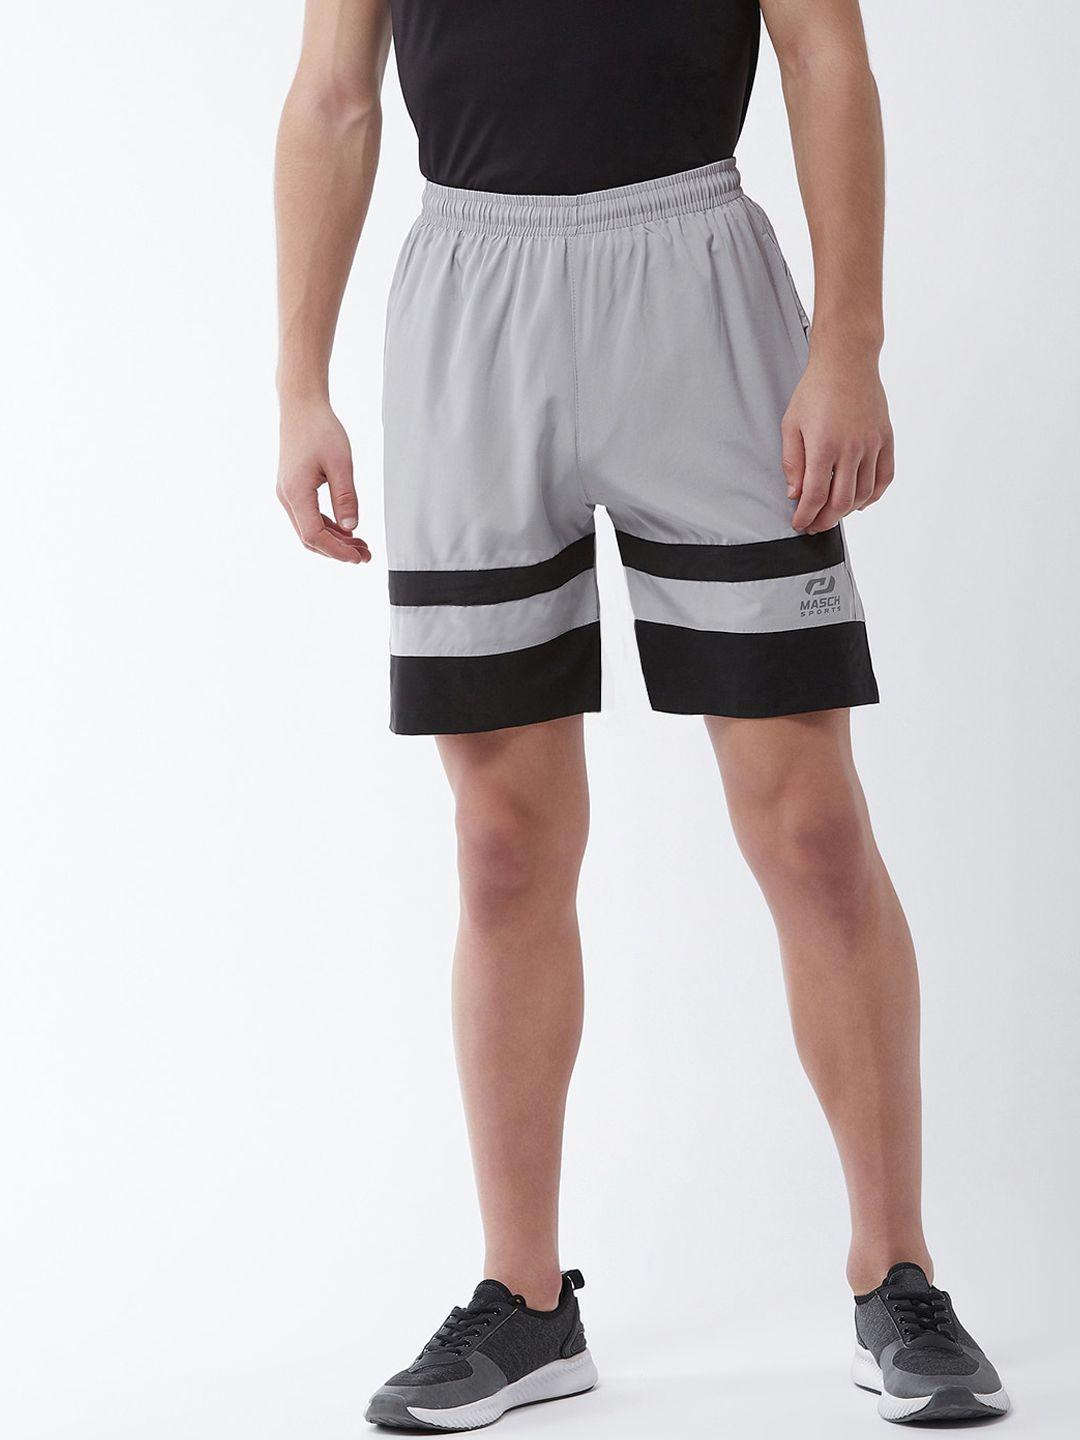 masch sports colourblocked mid rise sports shorts